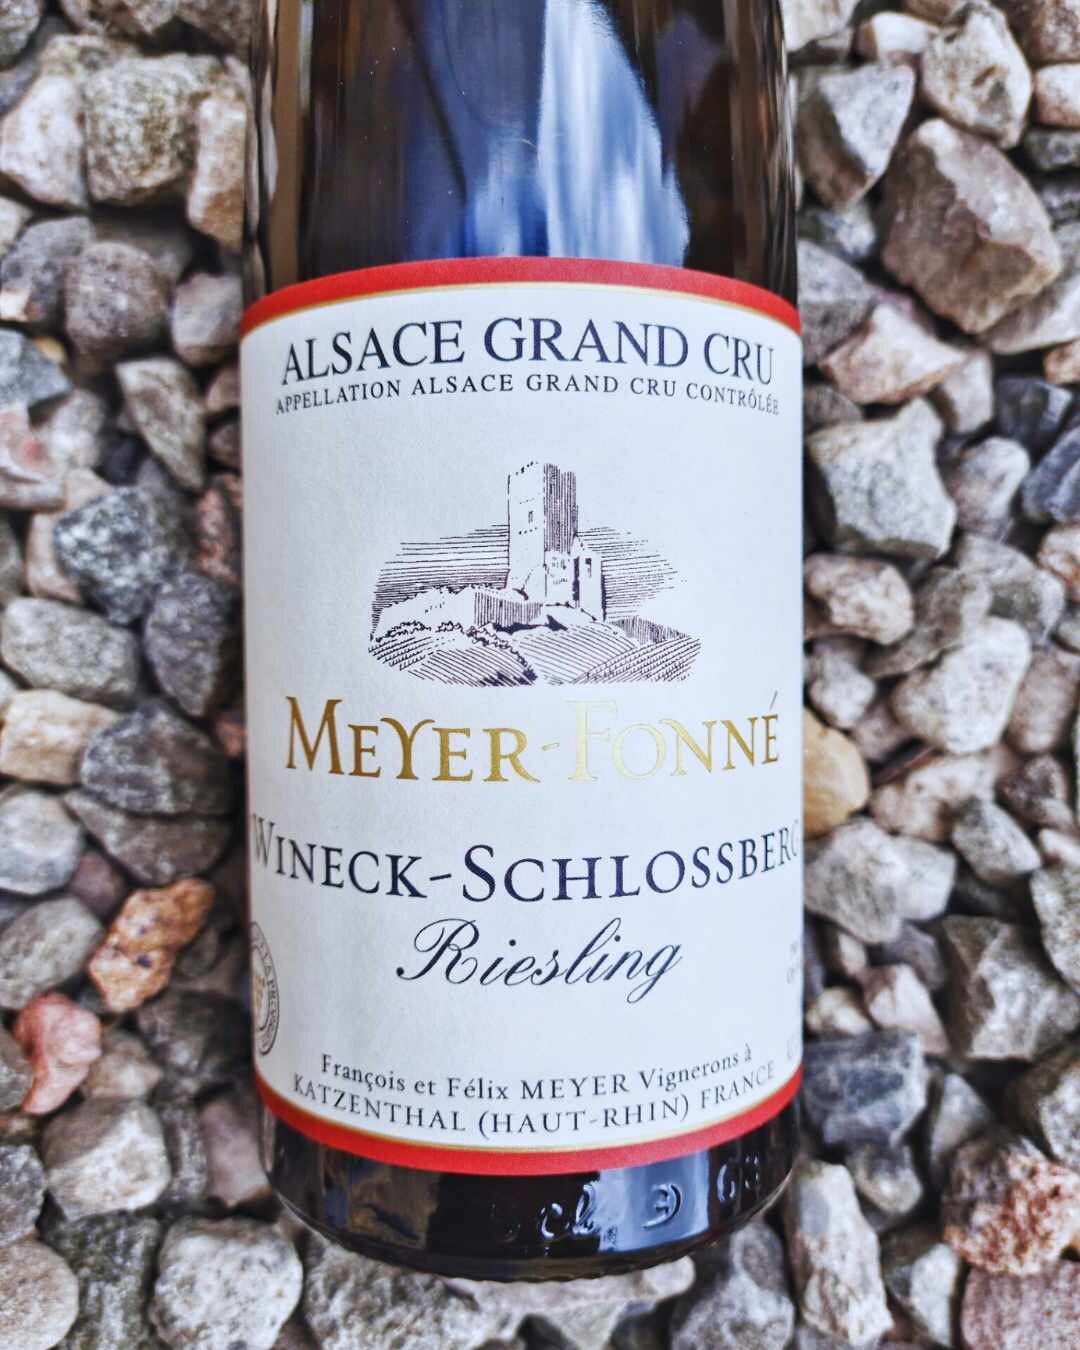 Meyer Fonne Riesling Grand Cru 'Wineck-Schlossberg' 2019